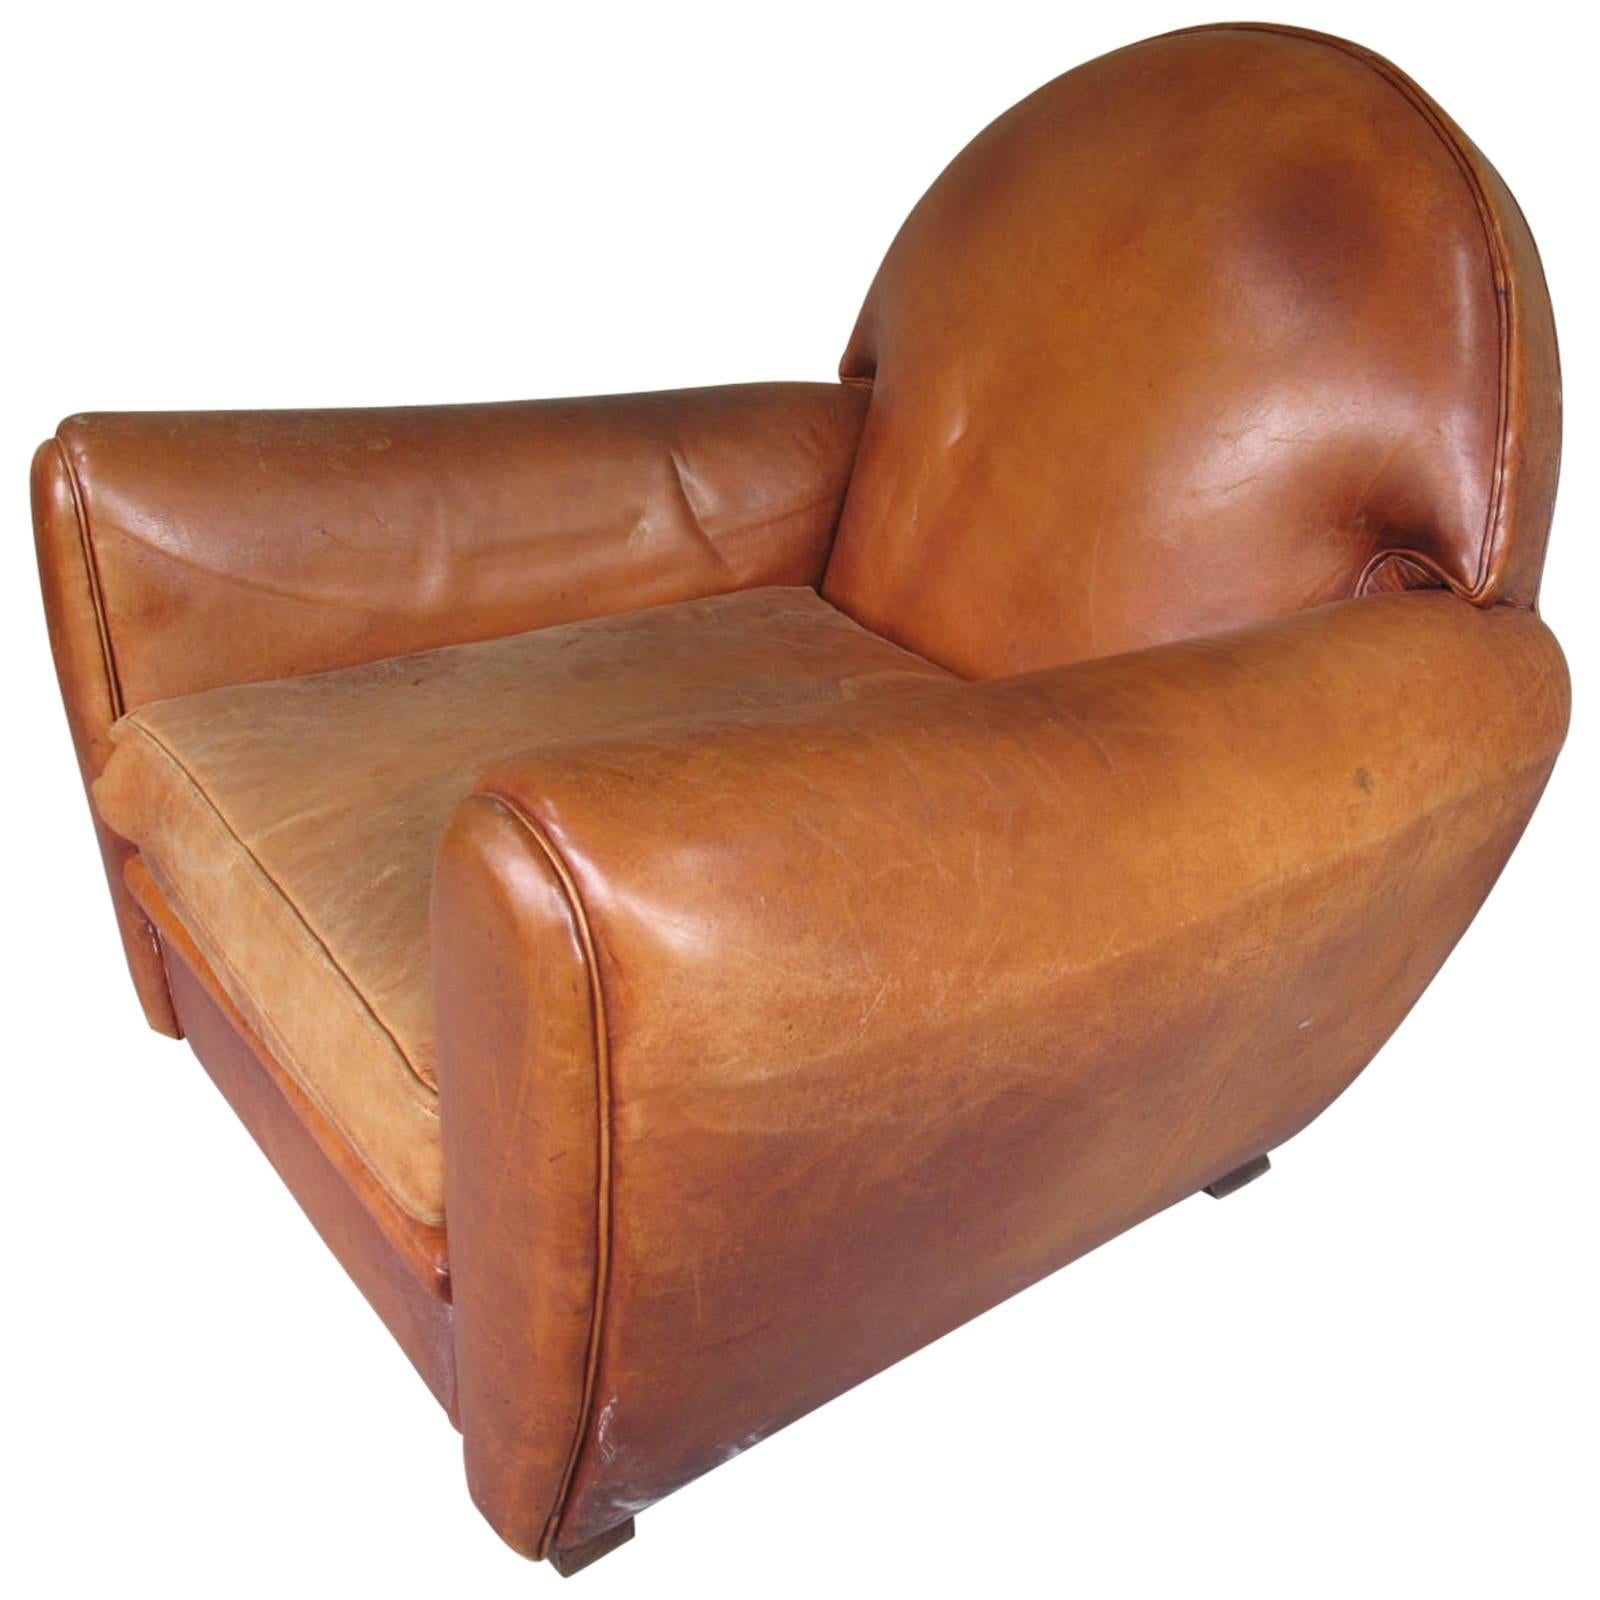 Monumental Art Deco Leather Club Chair